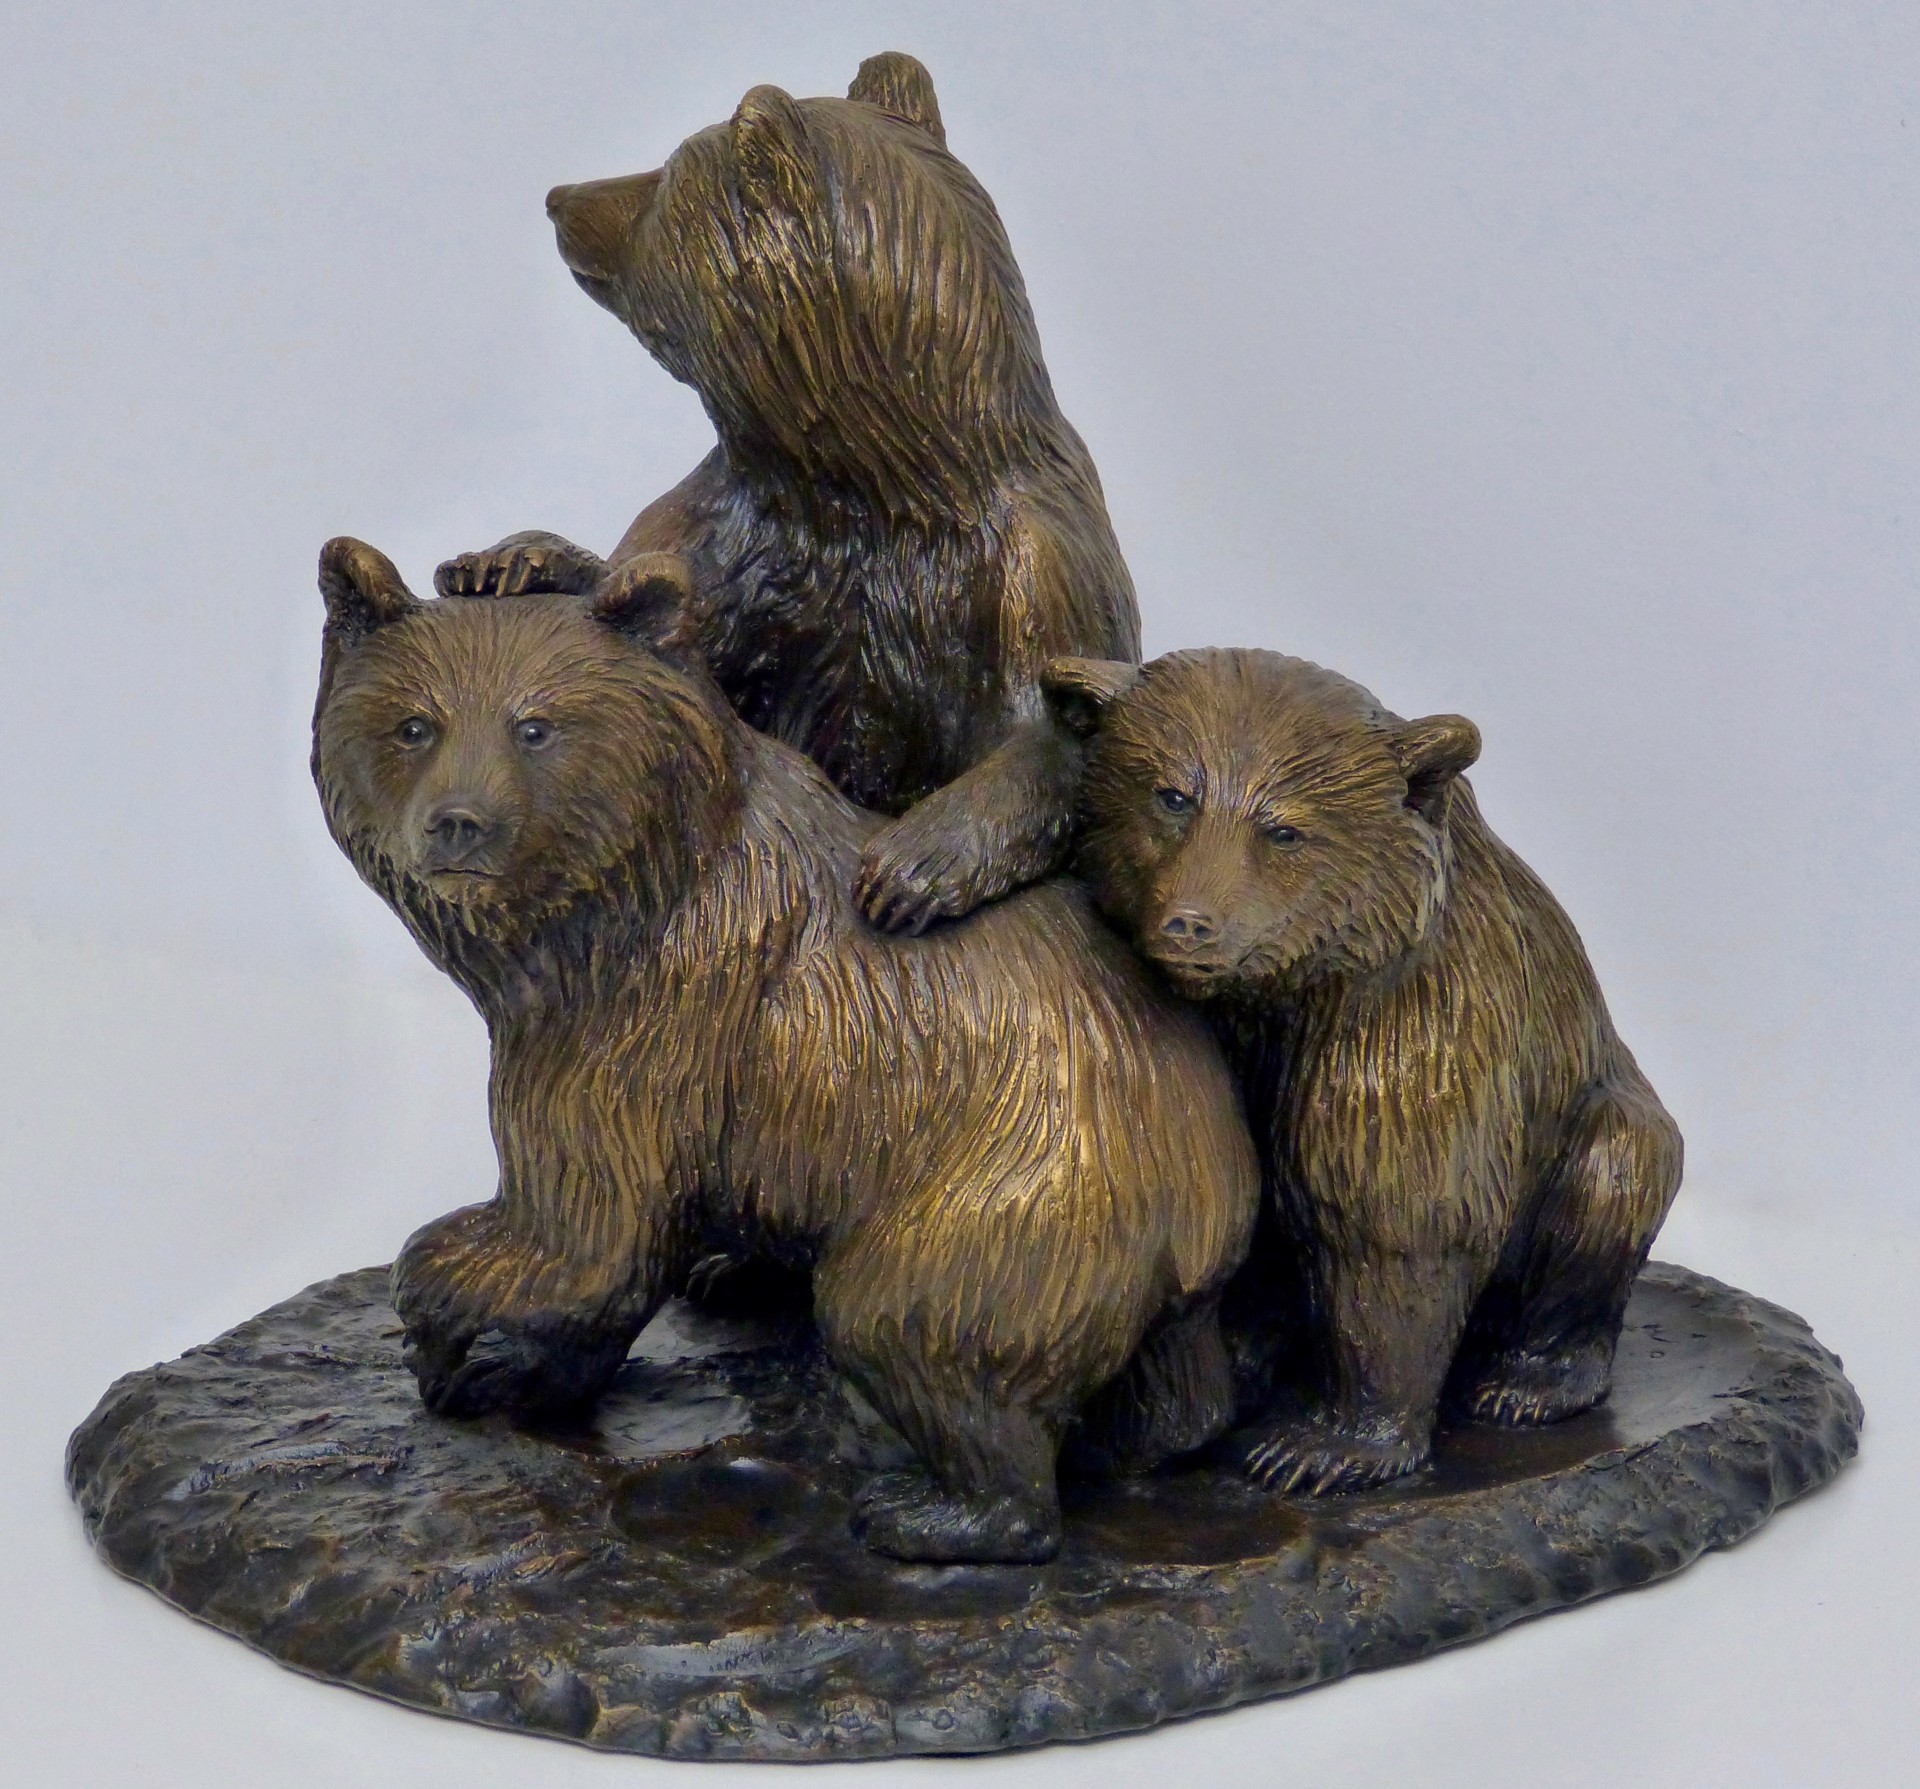 Three Little Bears by Tom Hjorleifson